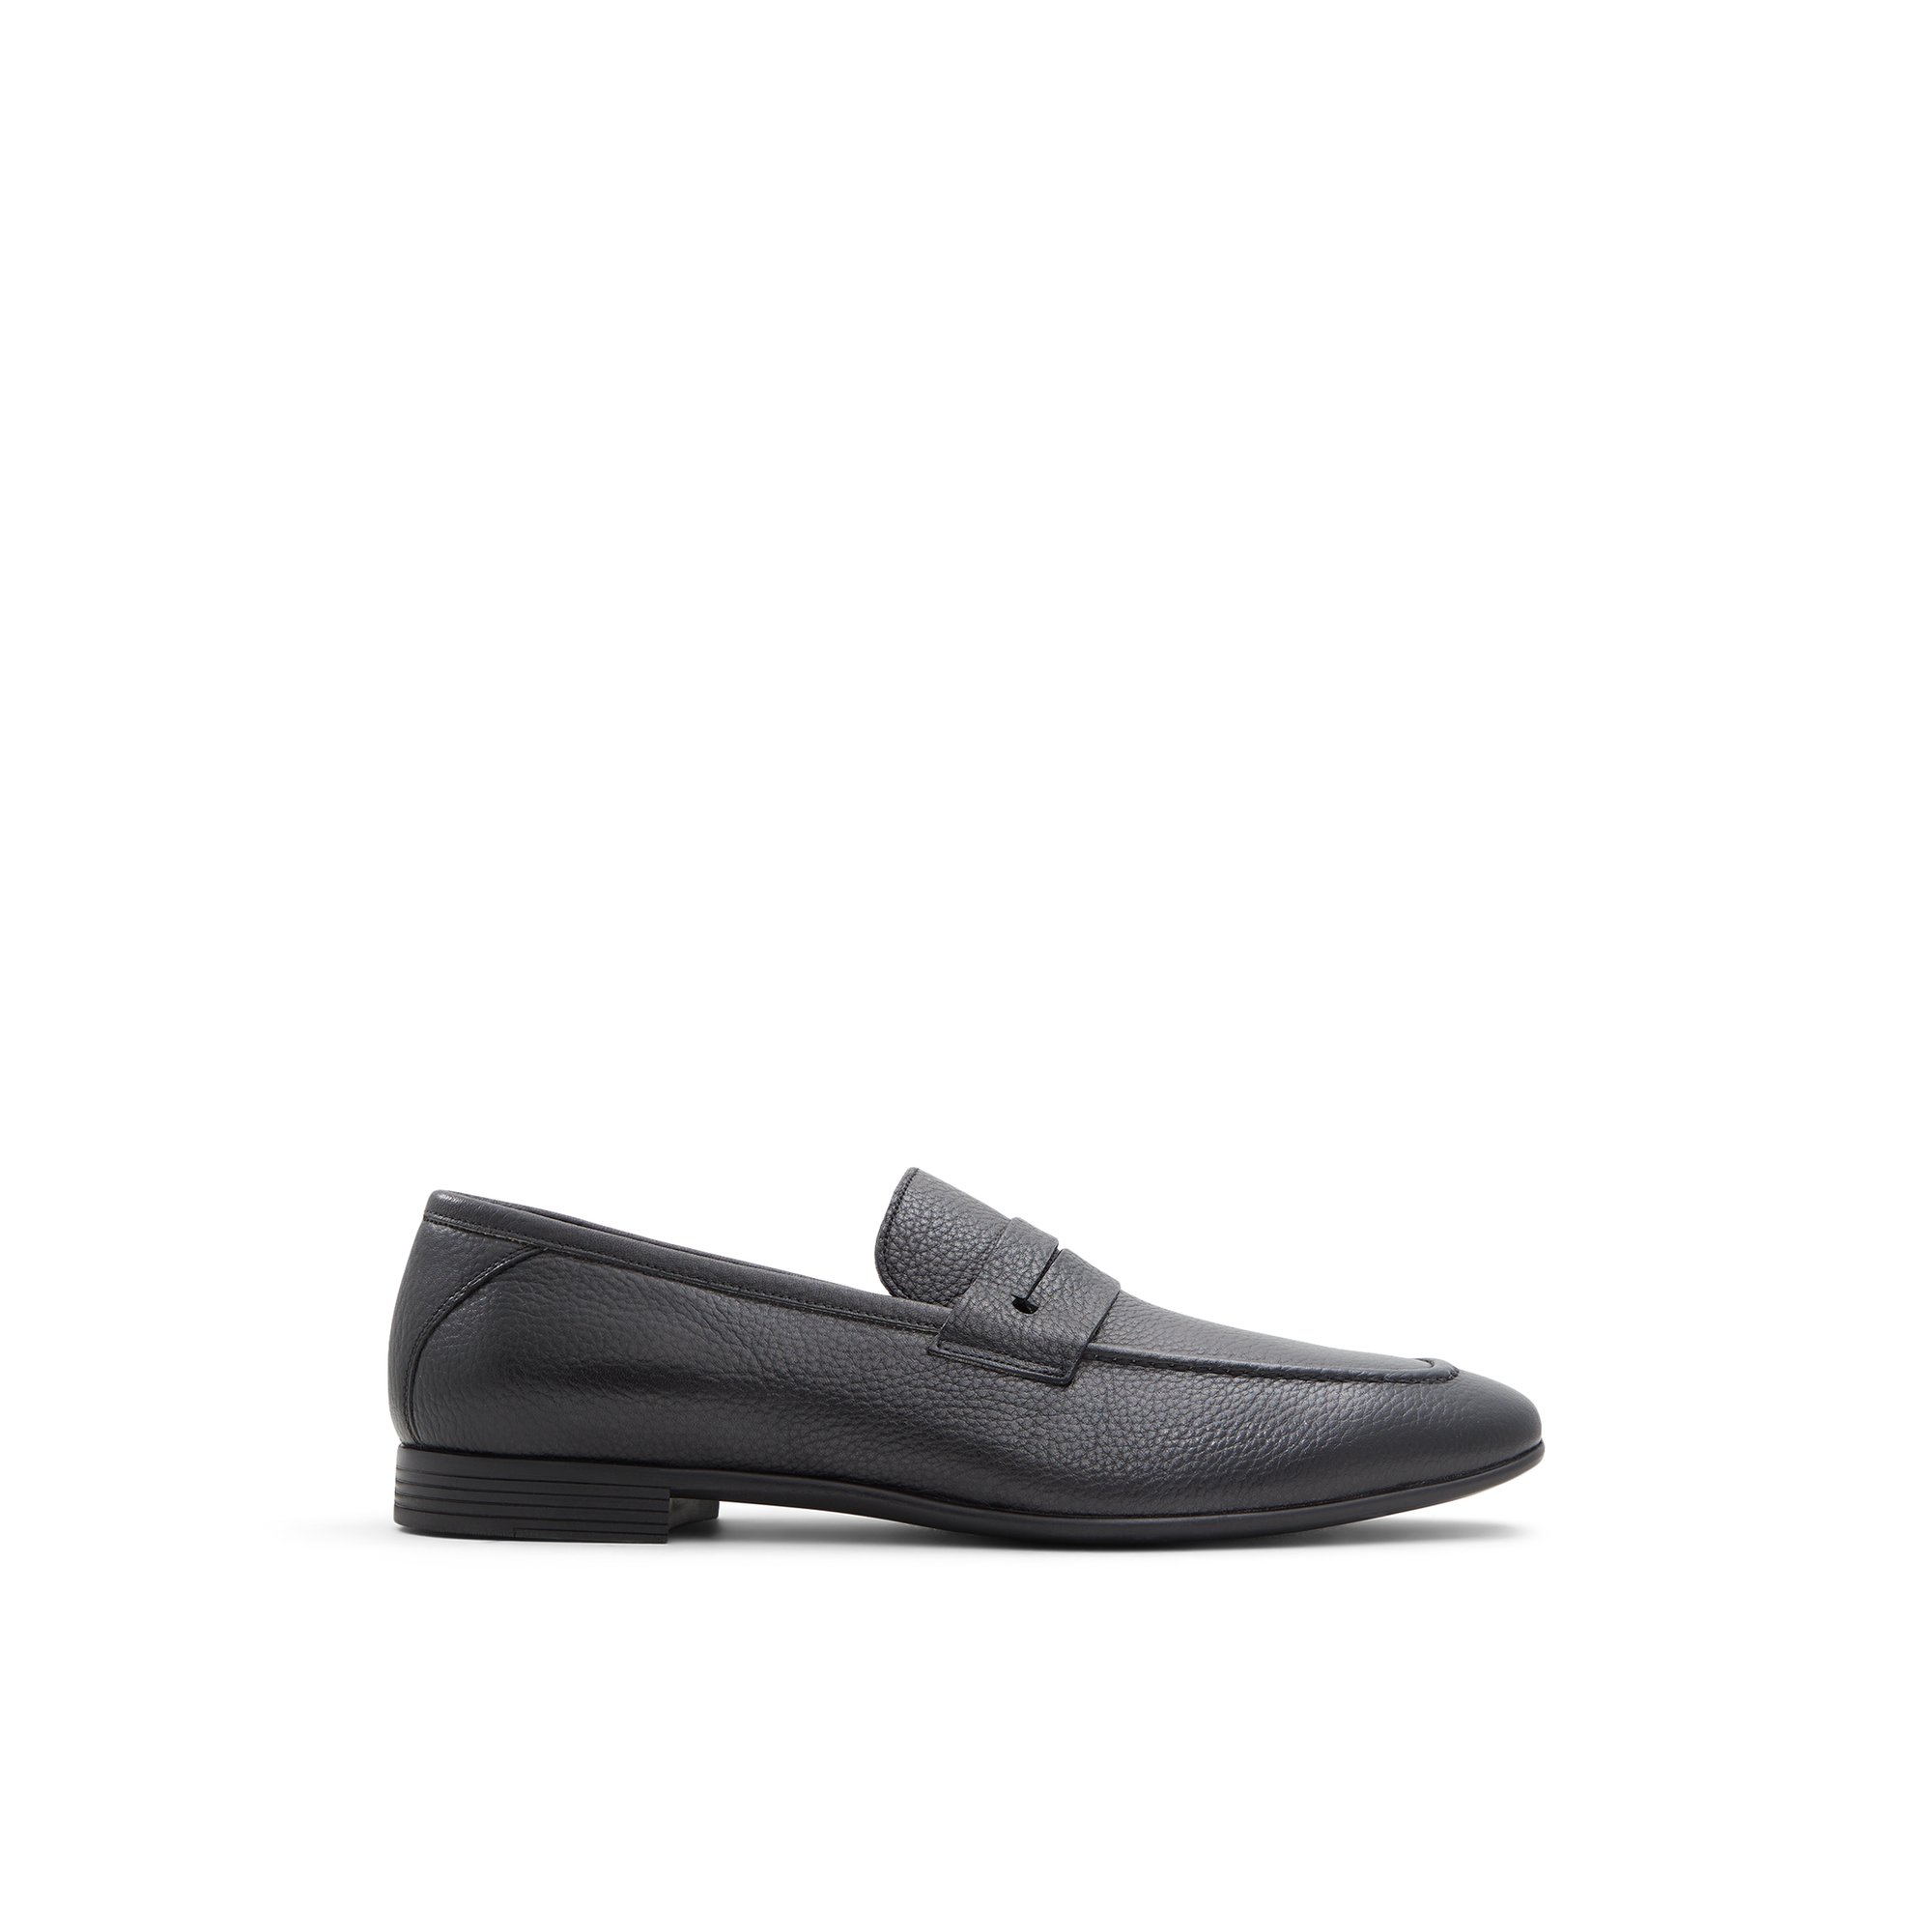 ALDO Watkins - Men's Dress Shoes - Black